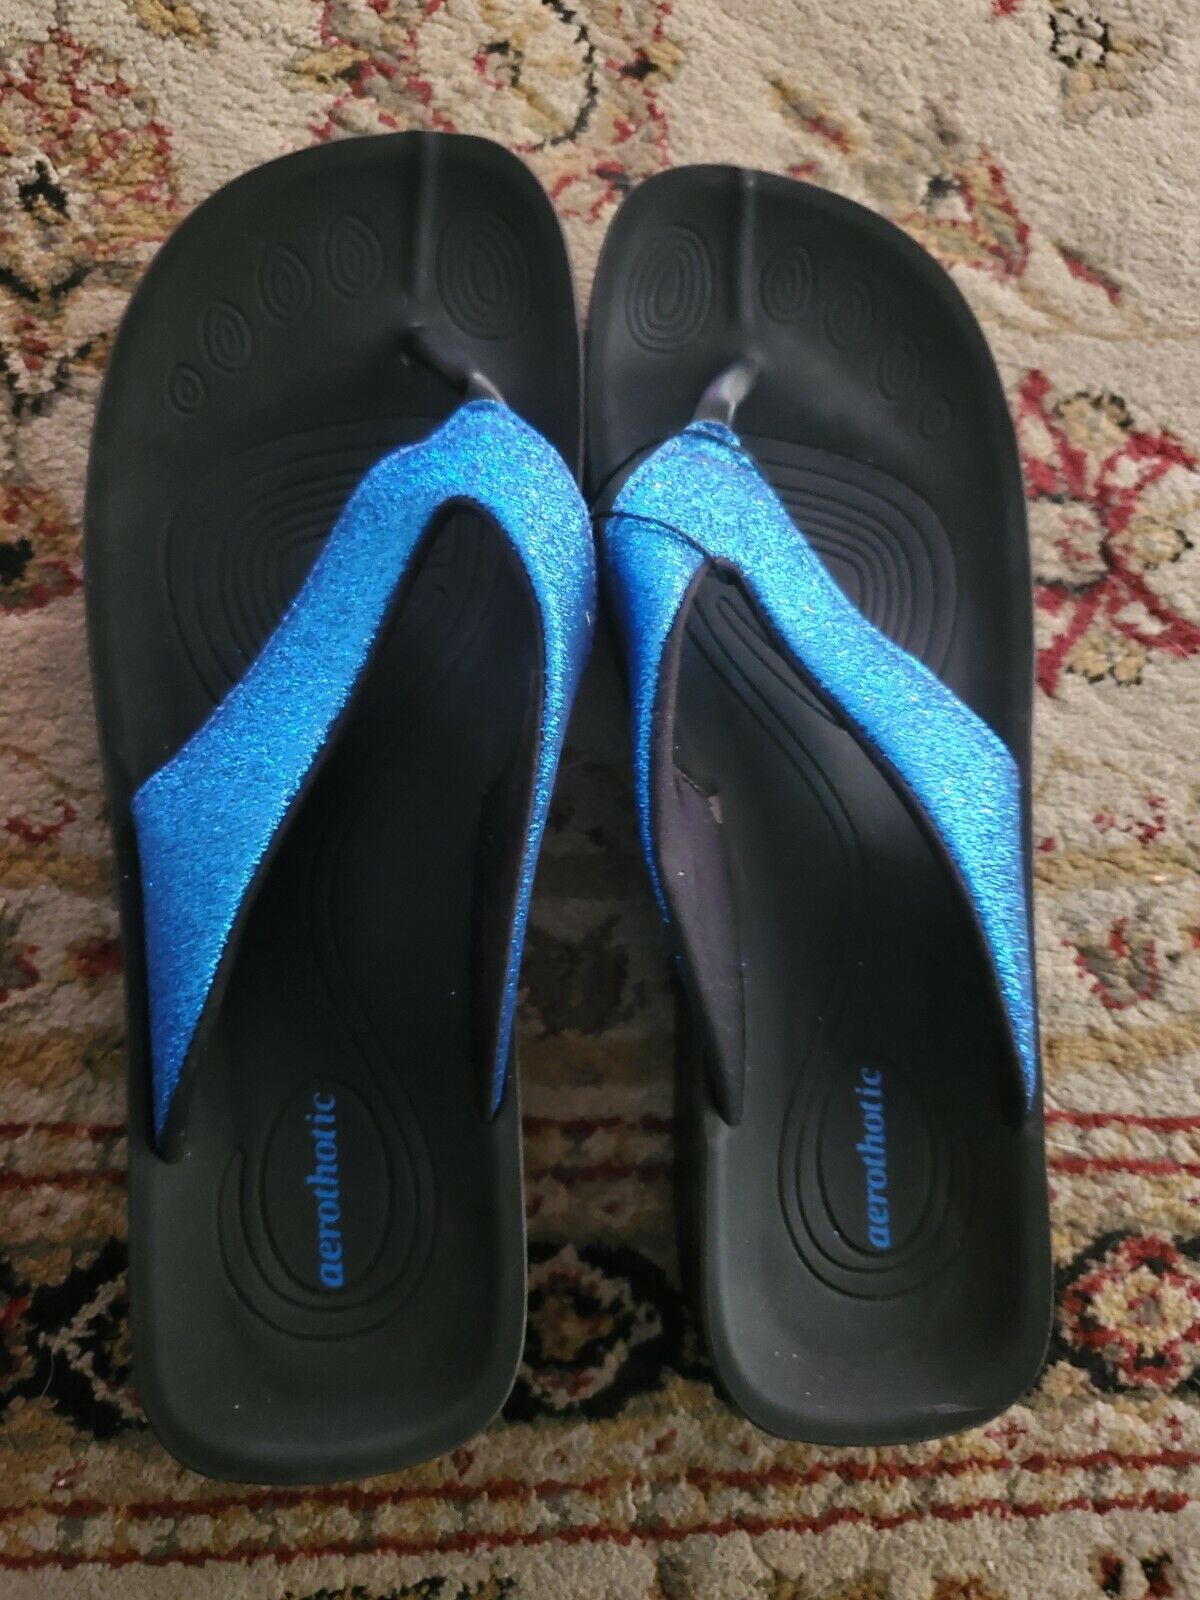 AEROTHOTIC Original Orthotic Comfort Thong Style Flip Flops Sandals for Women 10